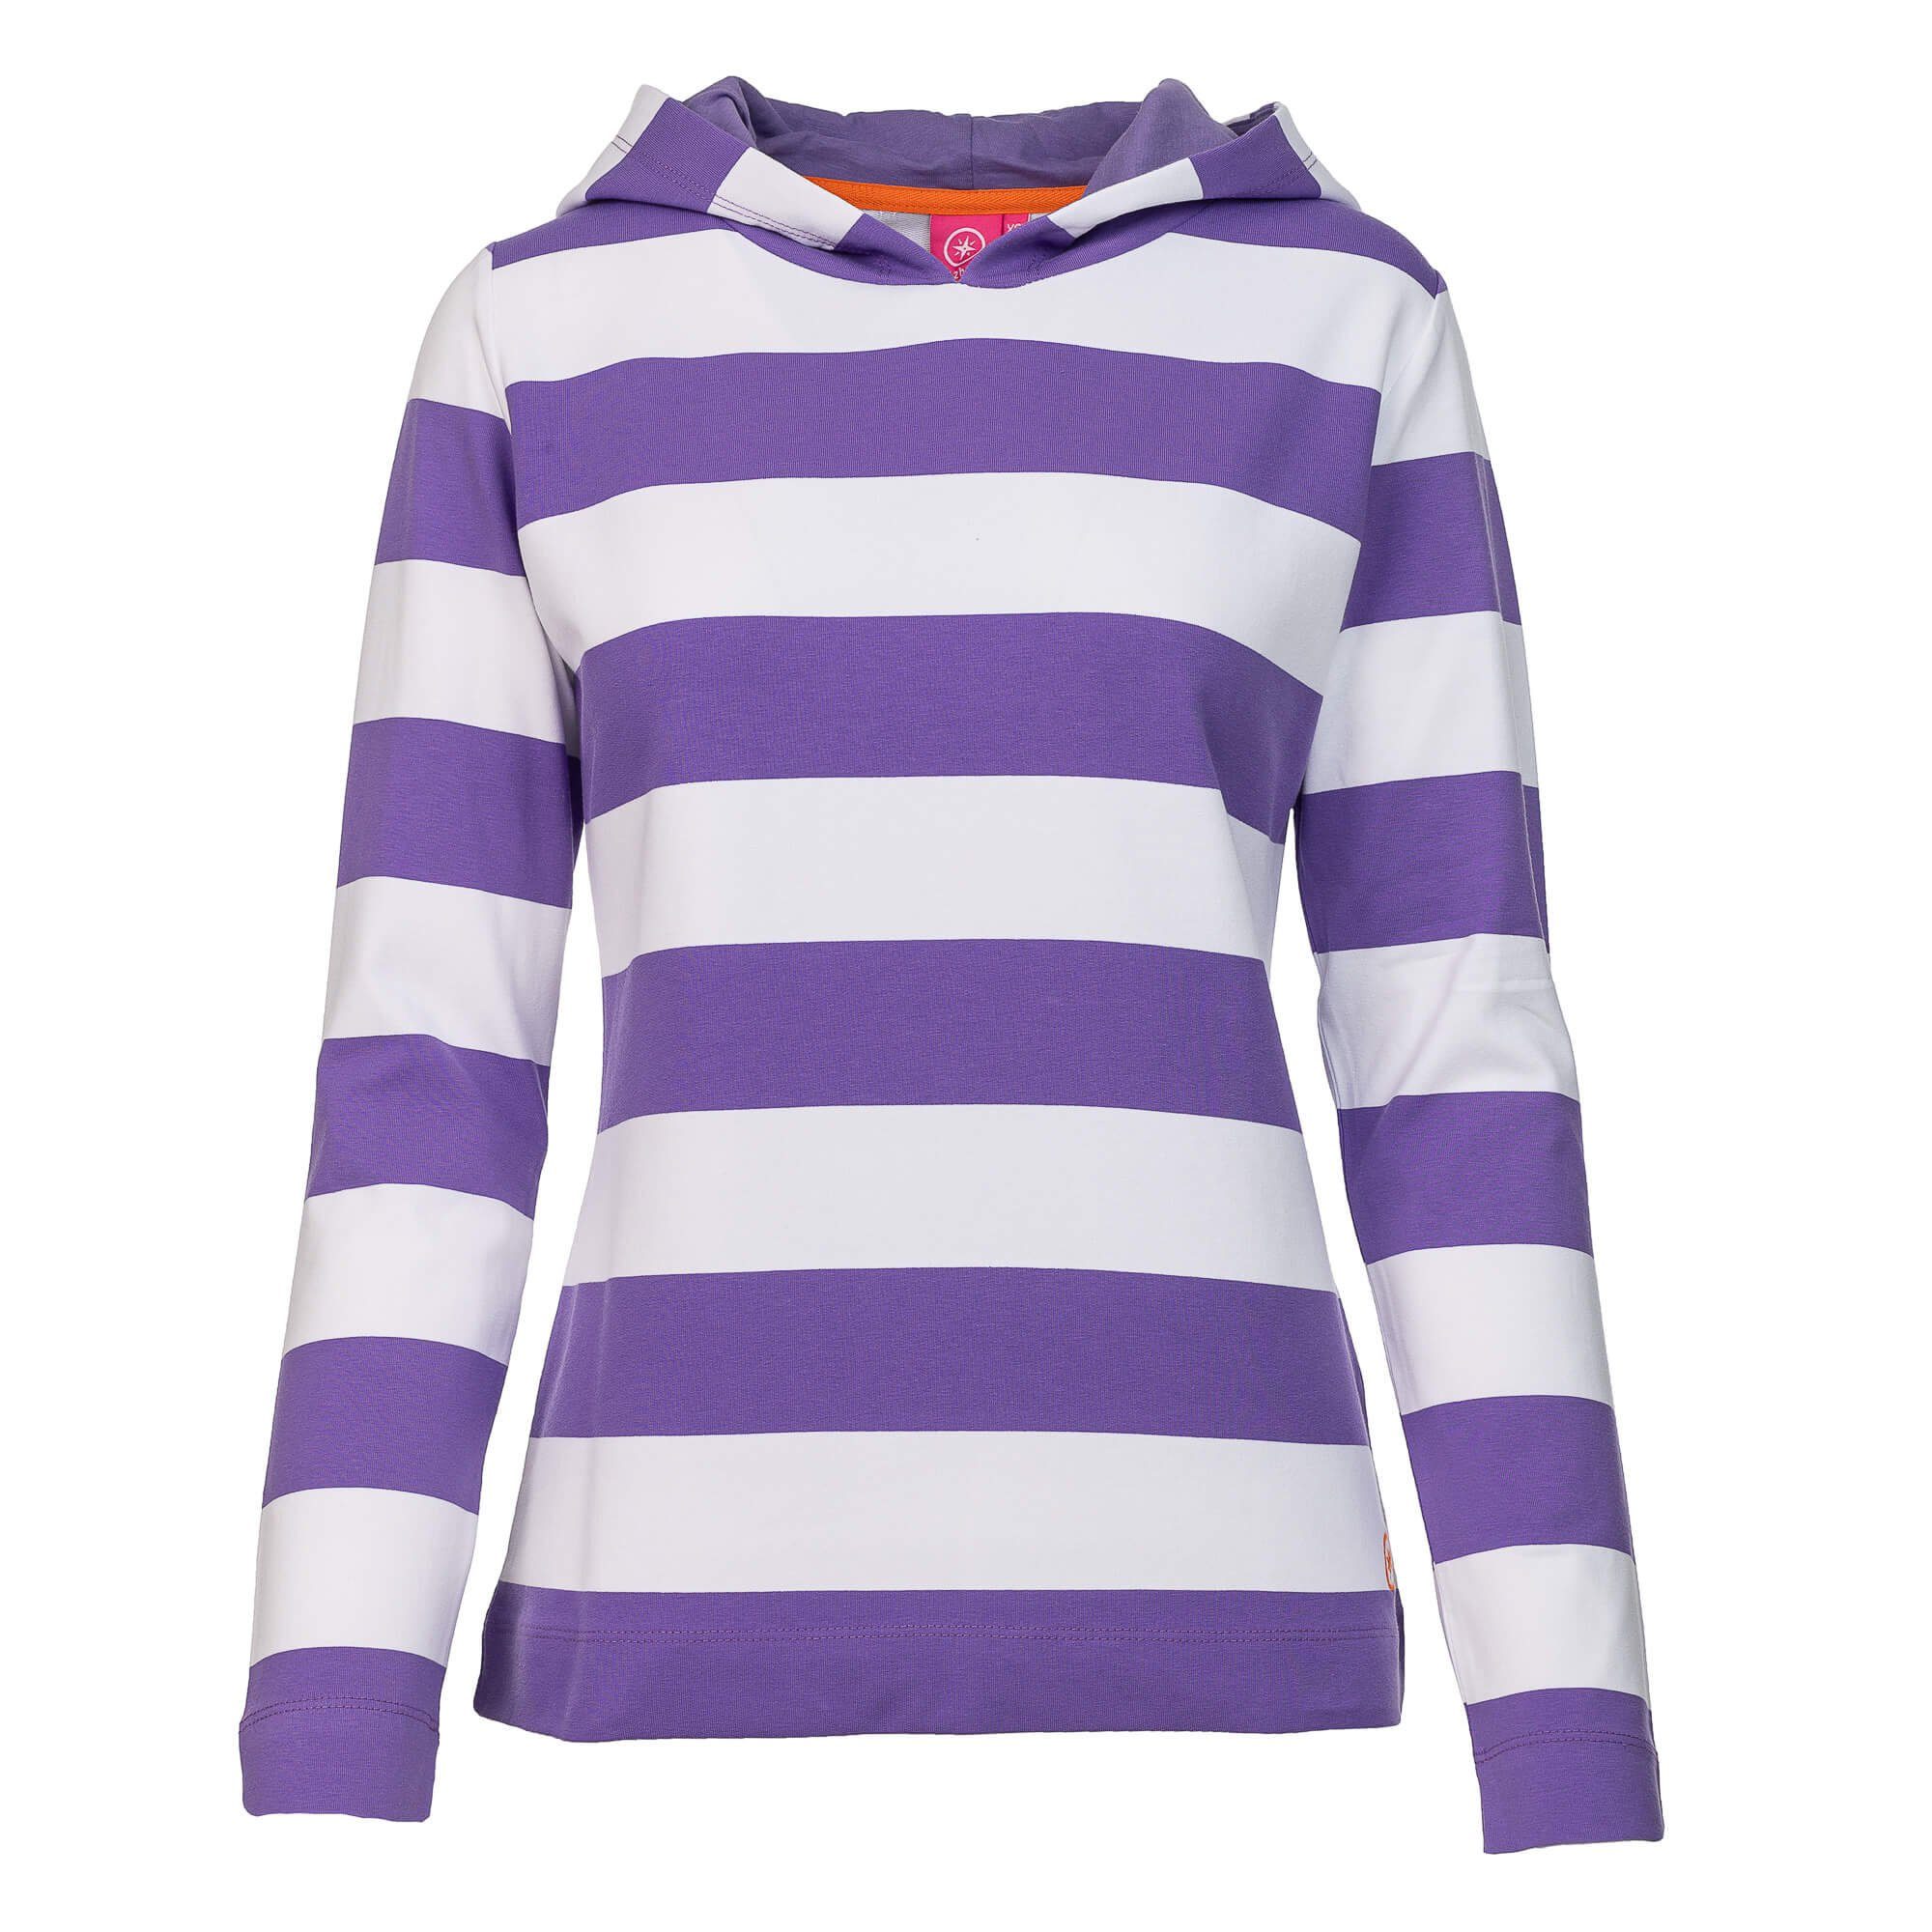 Colourblock-Streifen Hakana Hoodie salzhaut - Streifenshirt purple-white Kapuzen Shirt Damen Kapuzenshirt